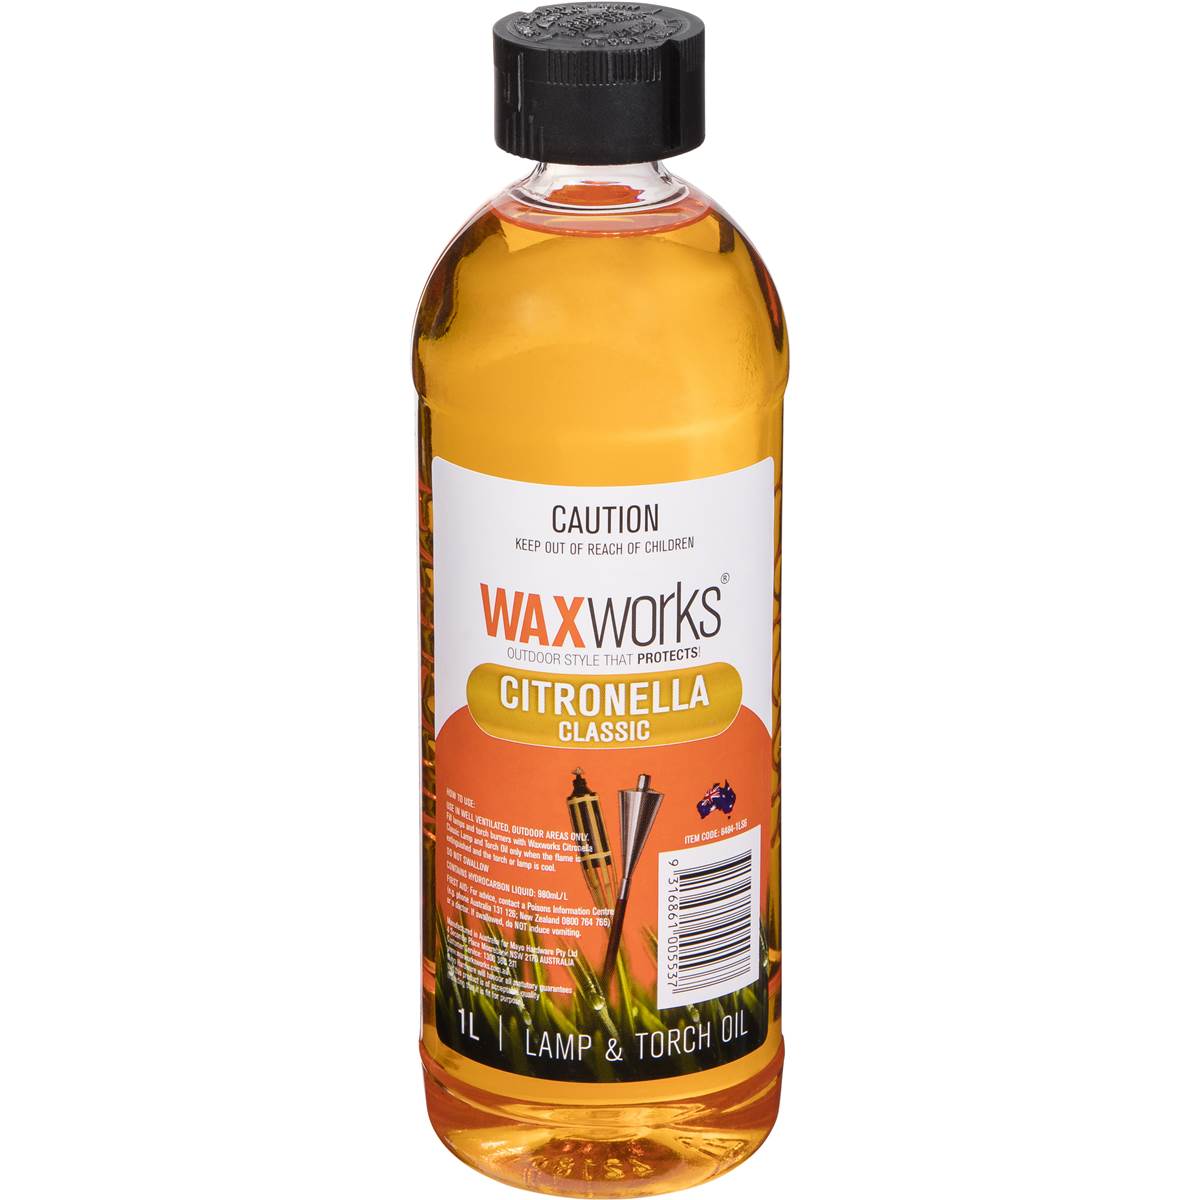 Waxworks Insect Control Citronella Oil